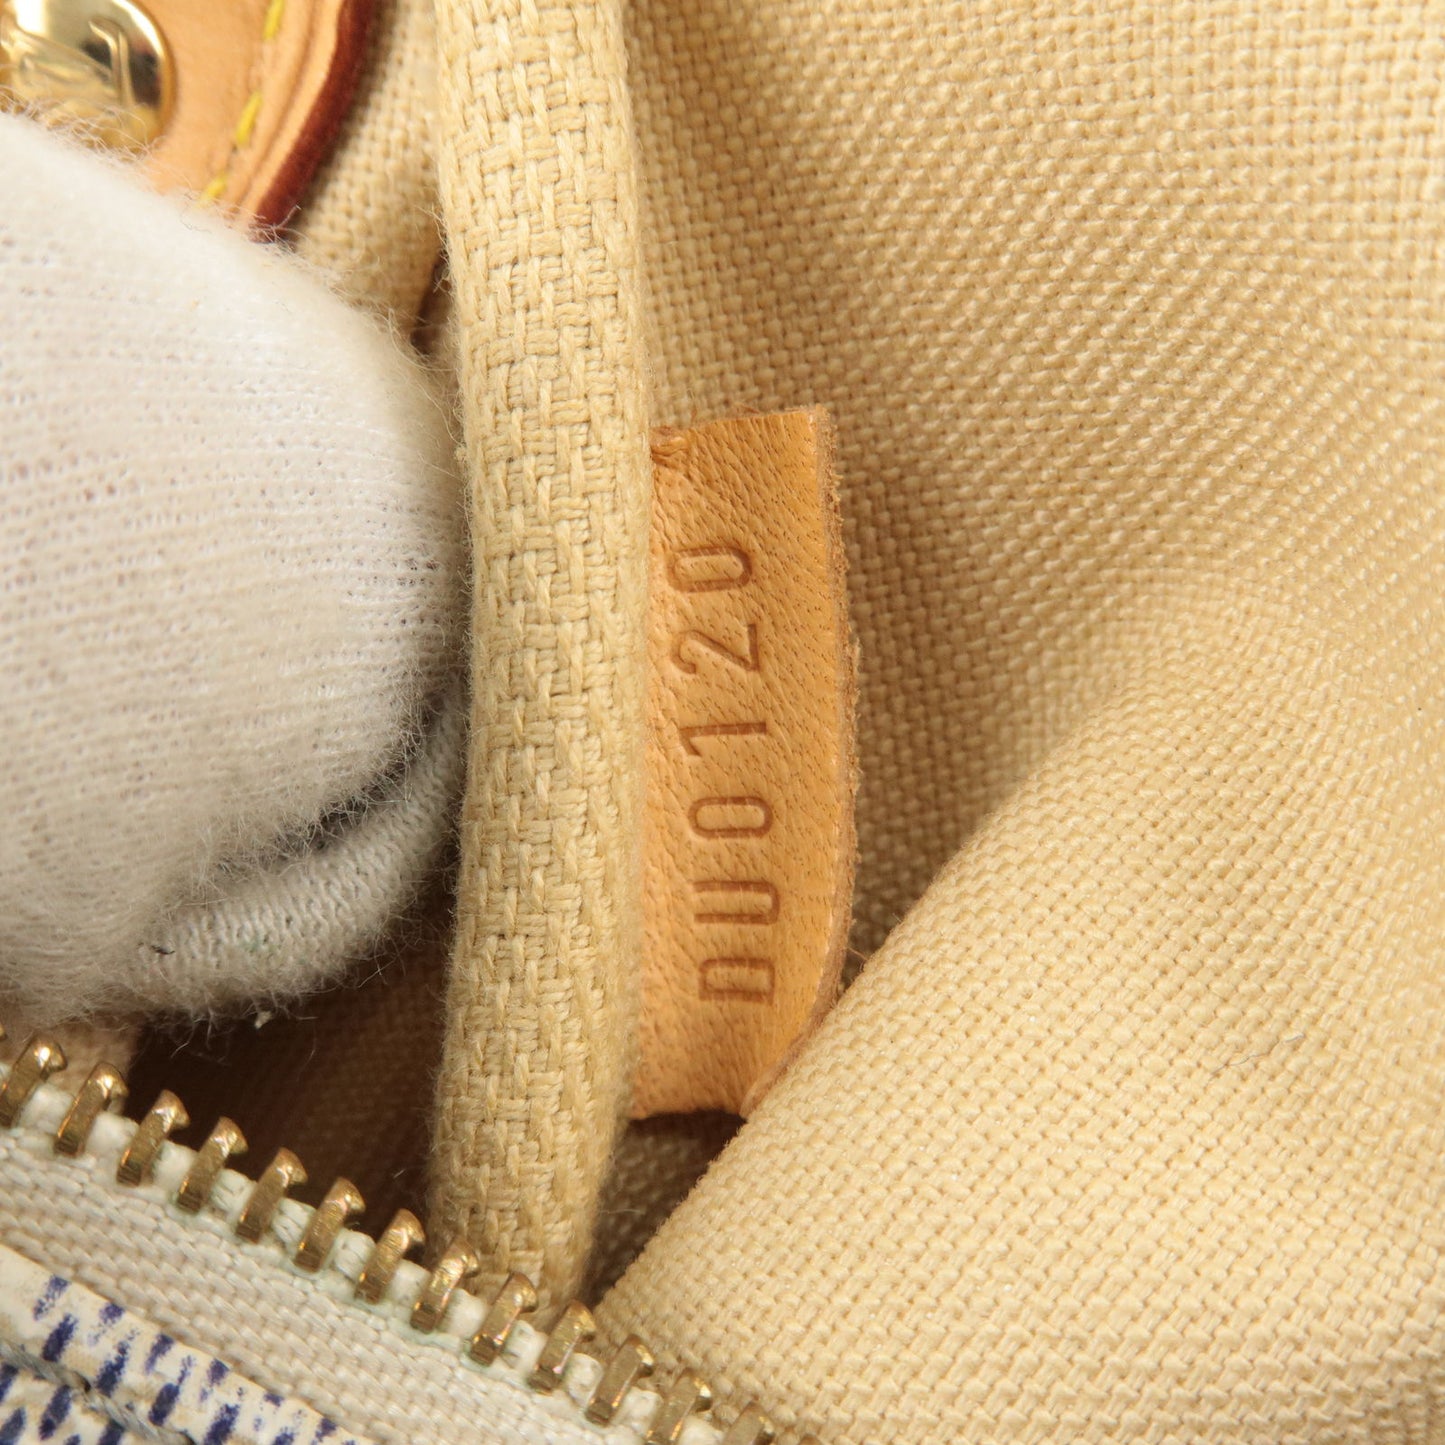 Louis Vuitton Damier Azur Eva 2 Way Bag Shoulder Bag N55214